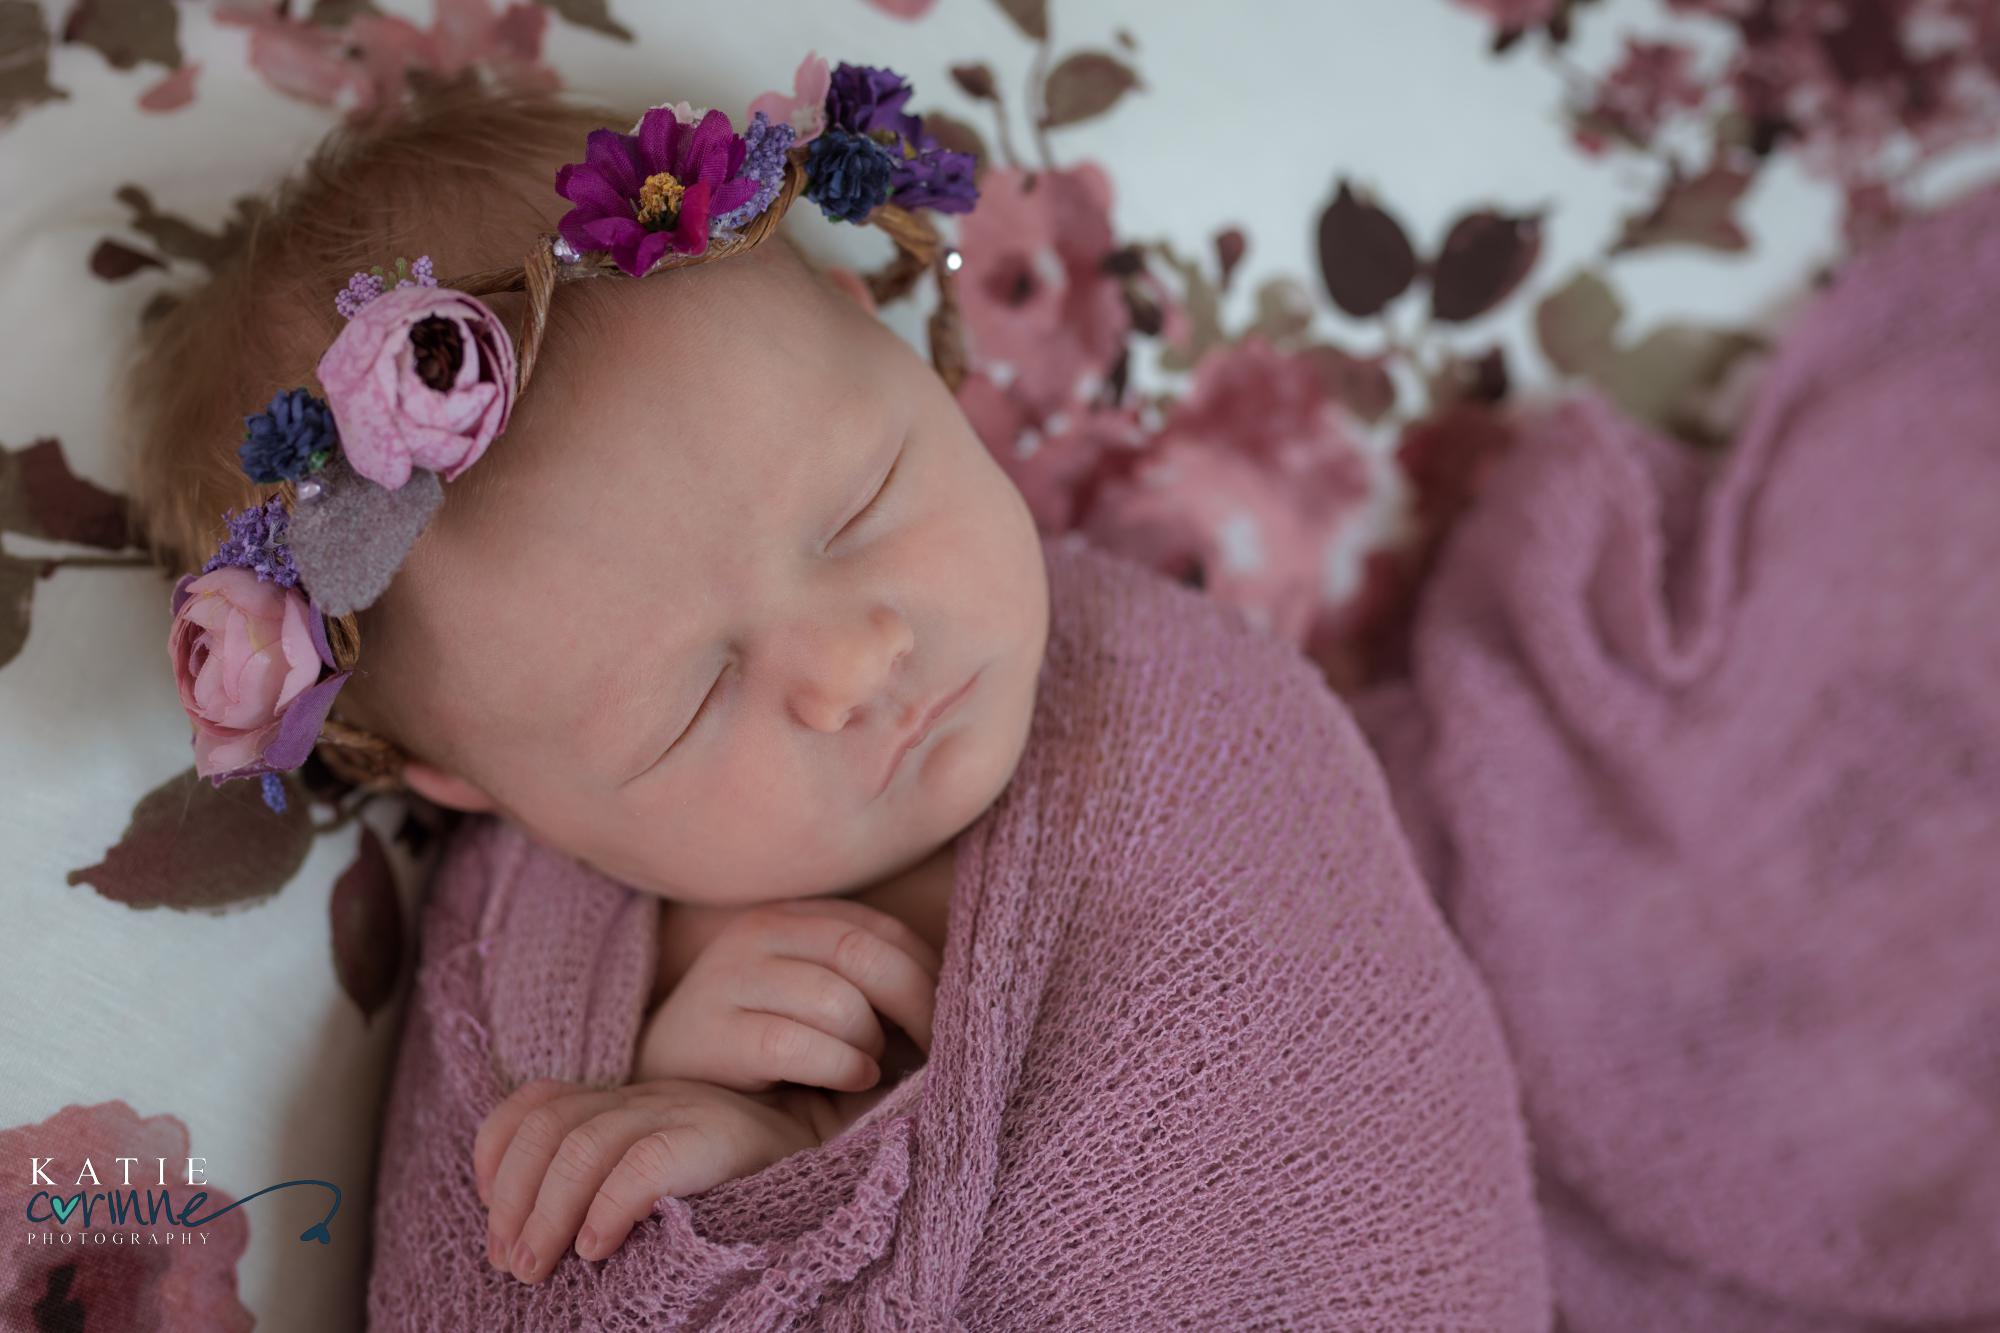 newborn baby girl wrapped in purple